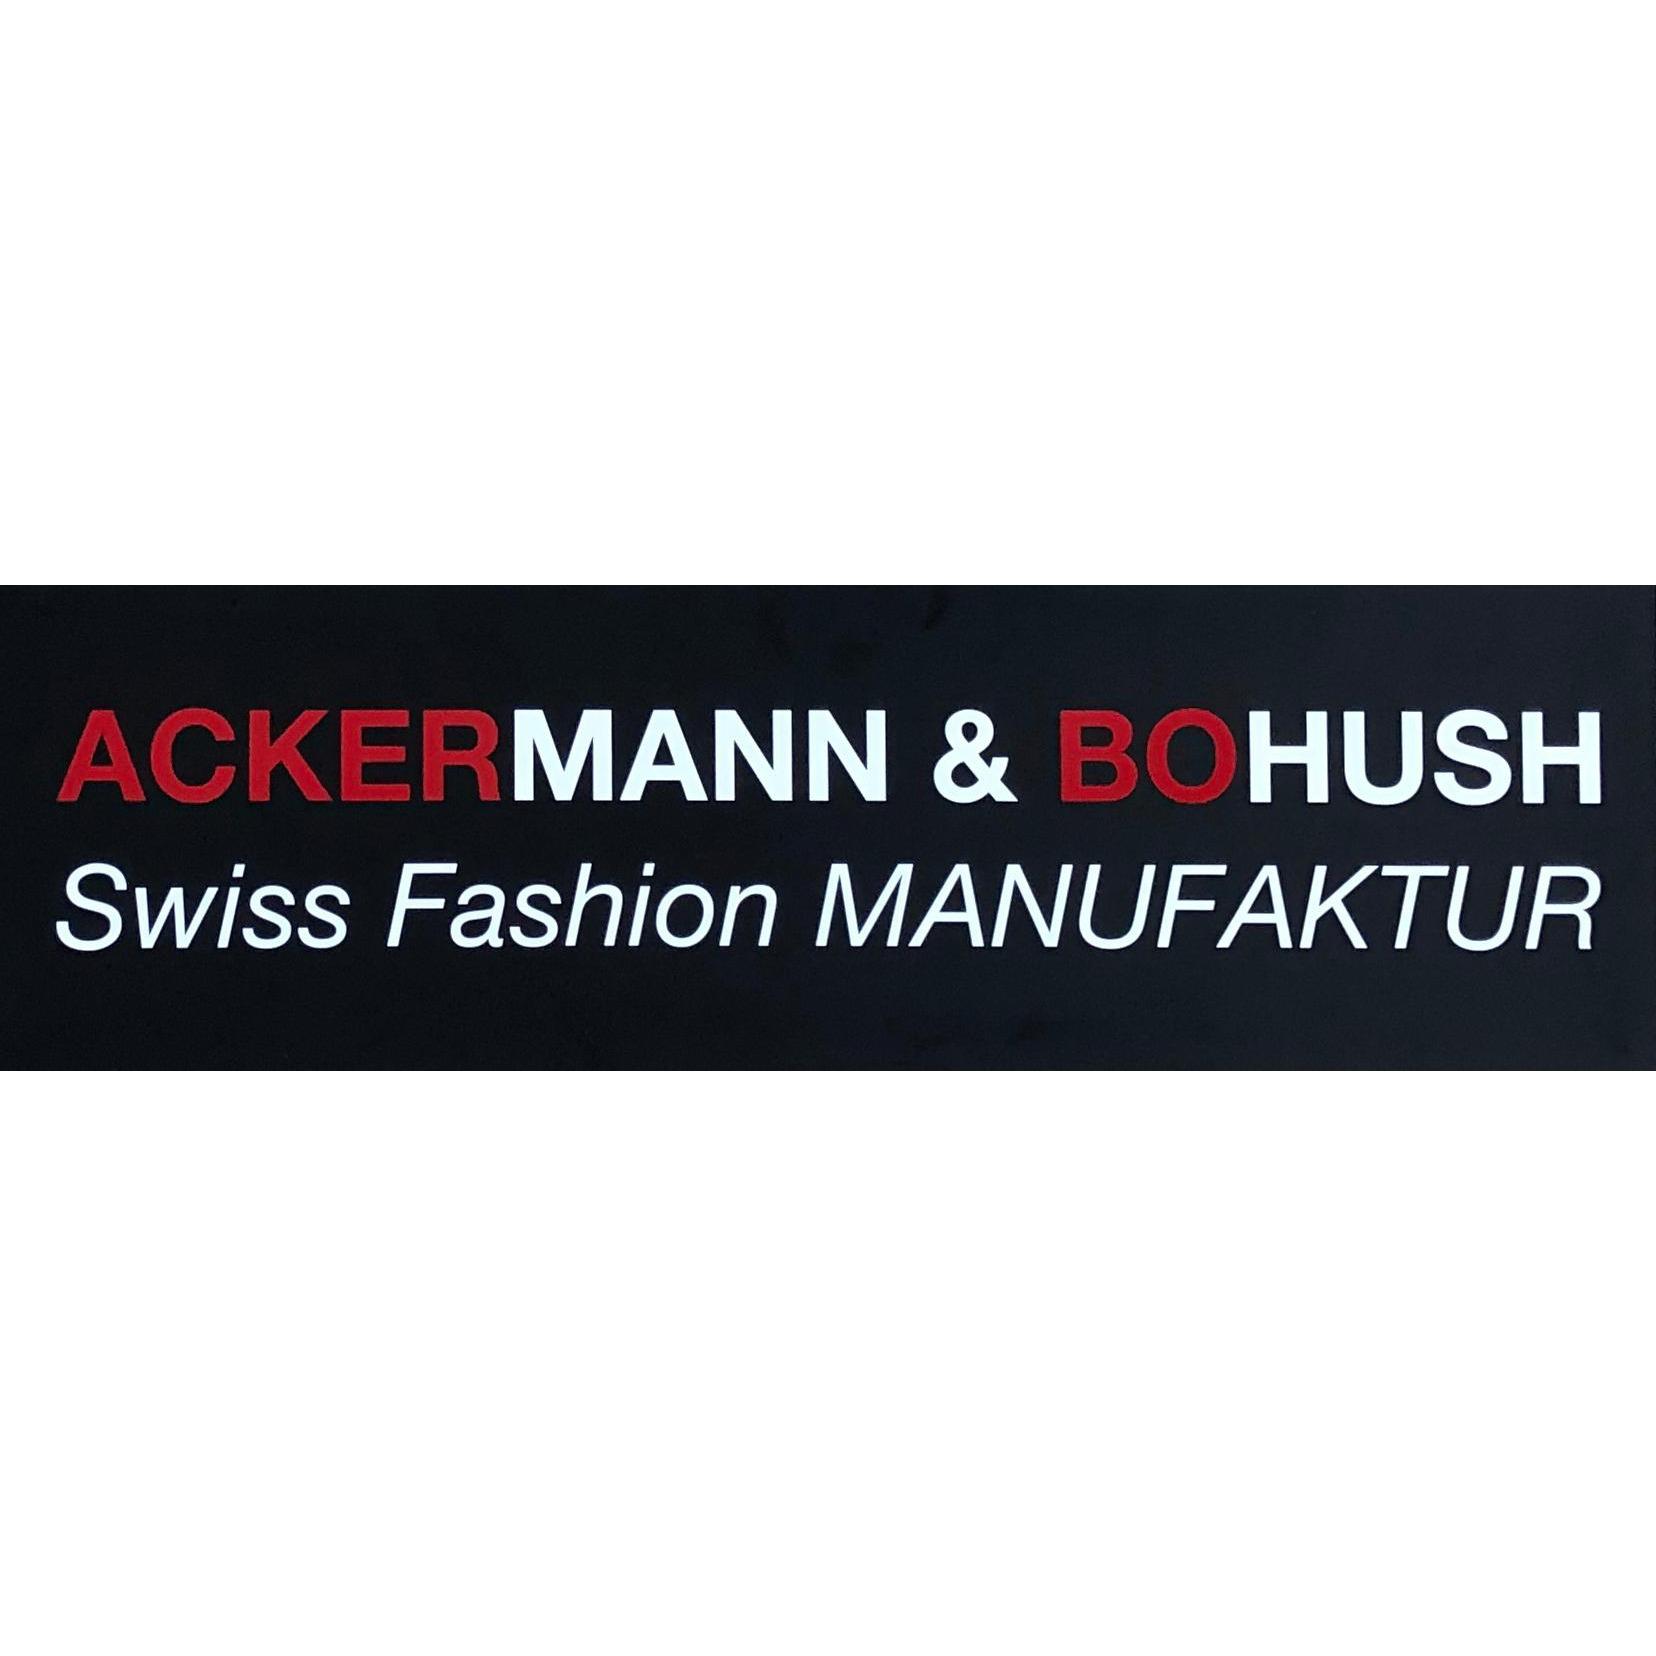 ACKERMANN & BOHUSH Swiss Fashion Manufacturer